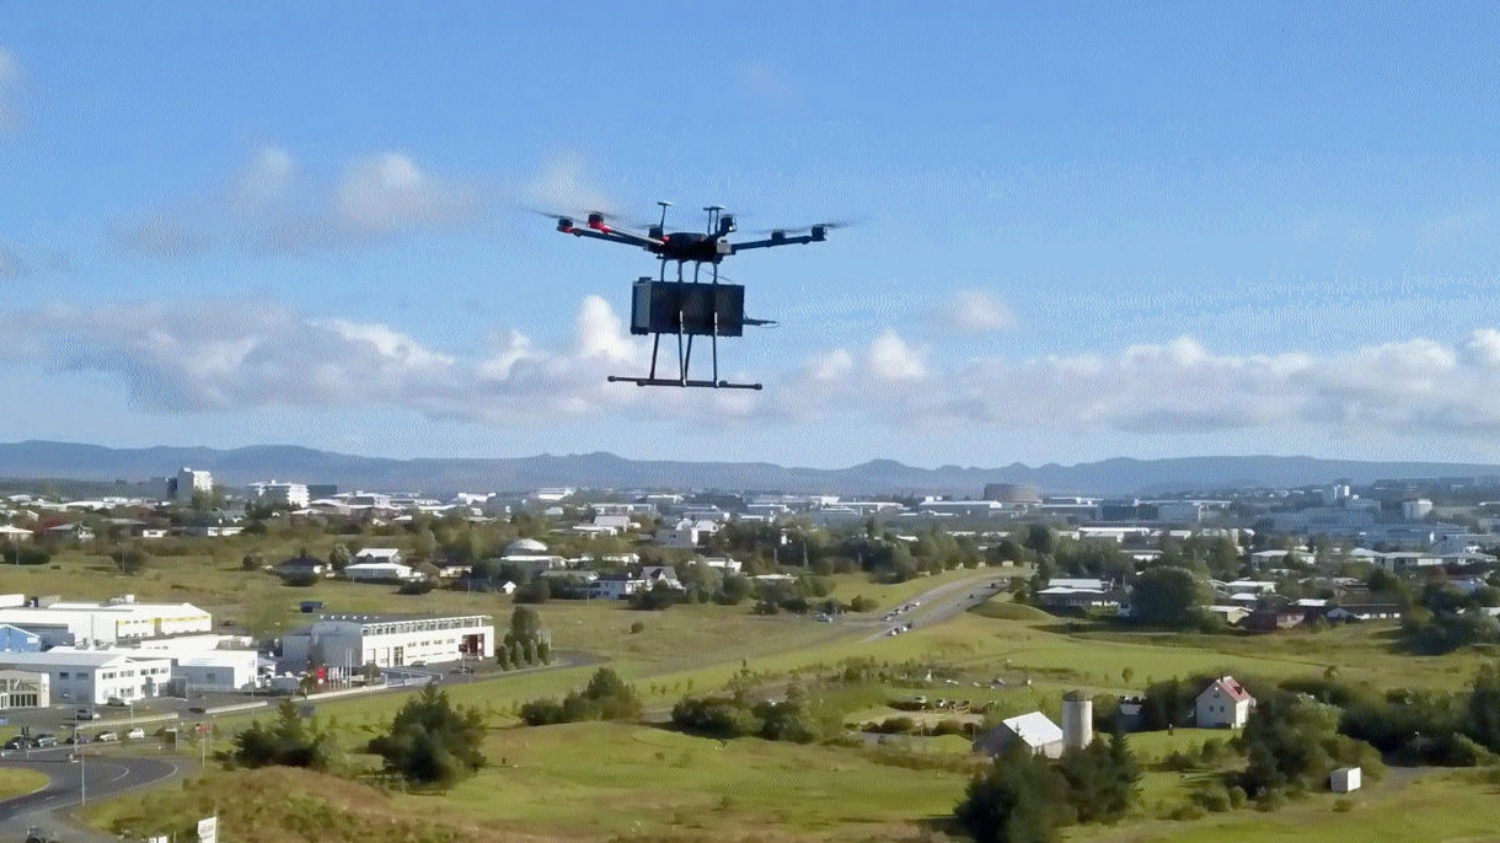 The Economist: Fast food via drone takes flight